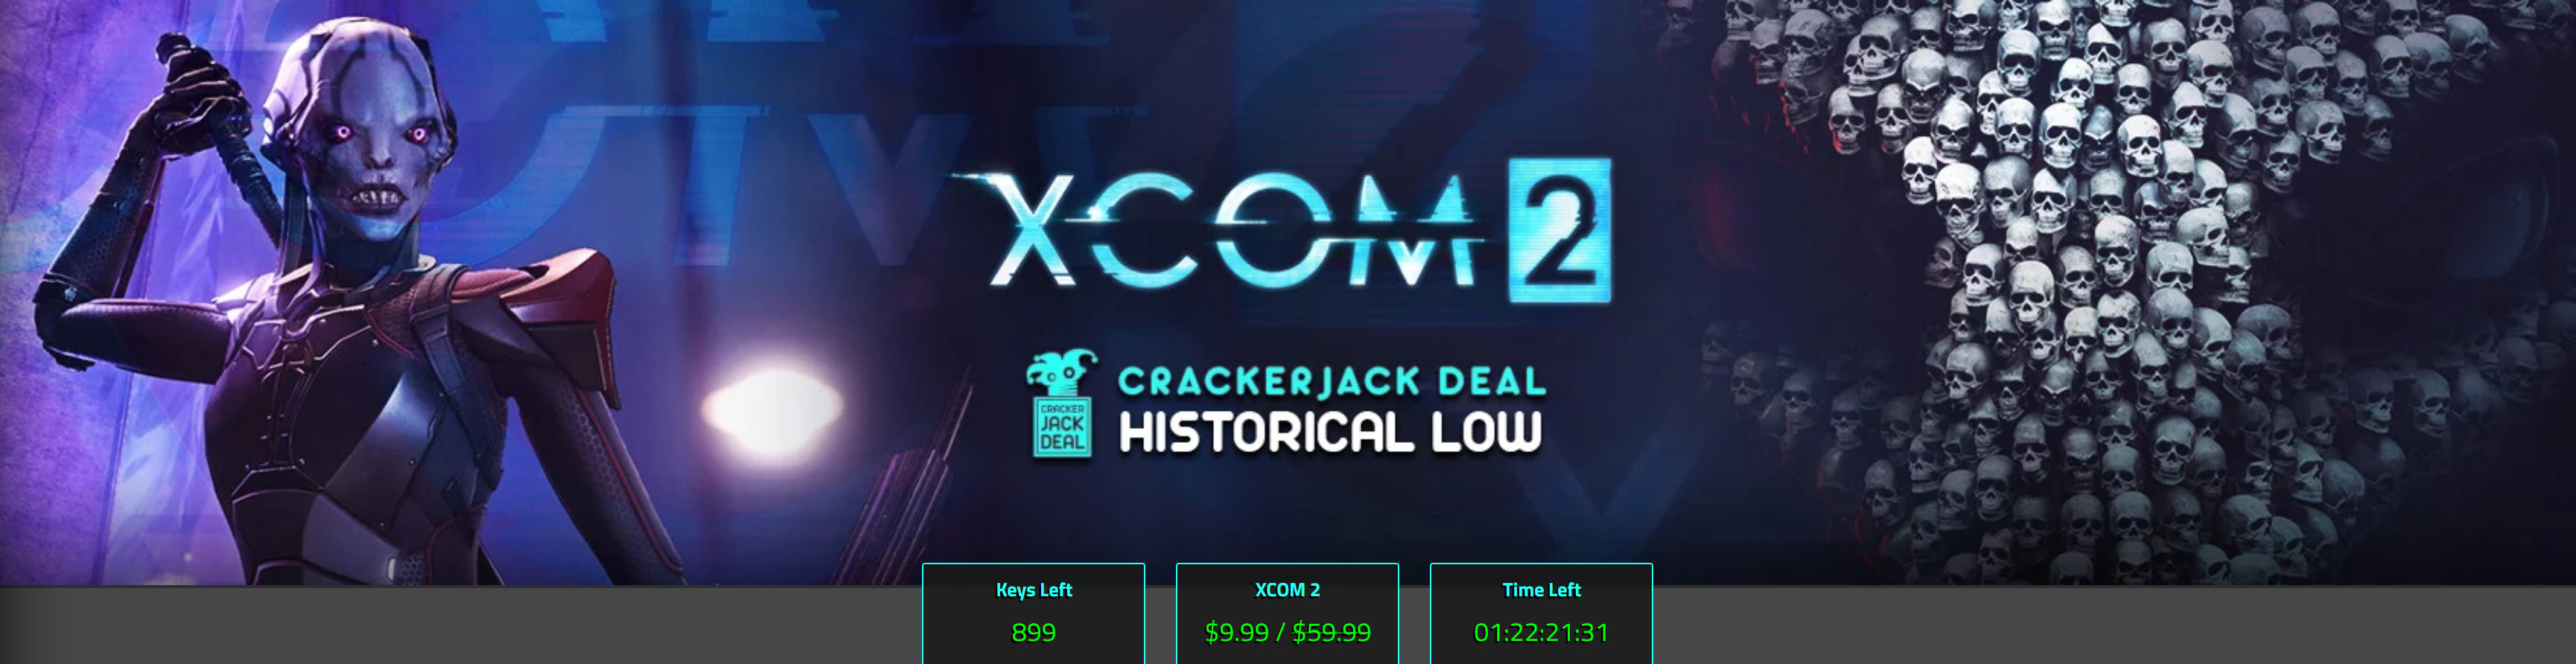 Screenshot_2019-07-30 XCOM® 2 at -83% Crackerjack Deal .jpg